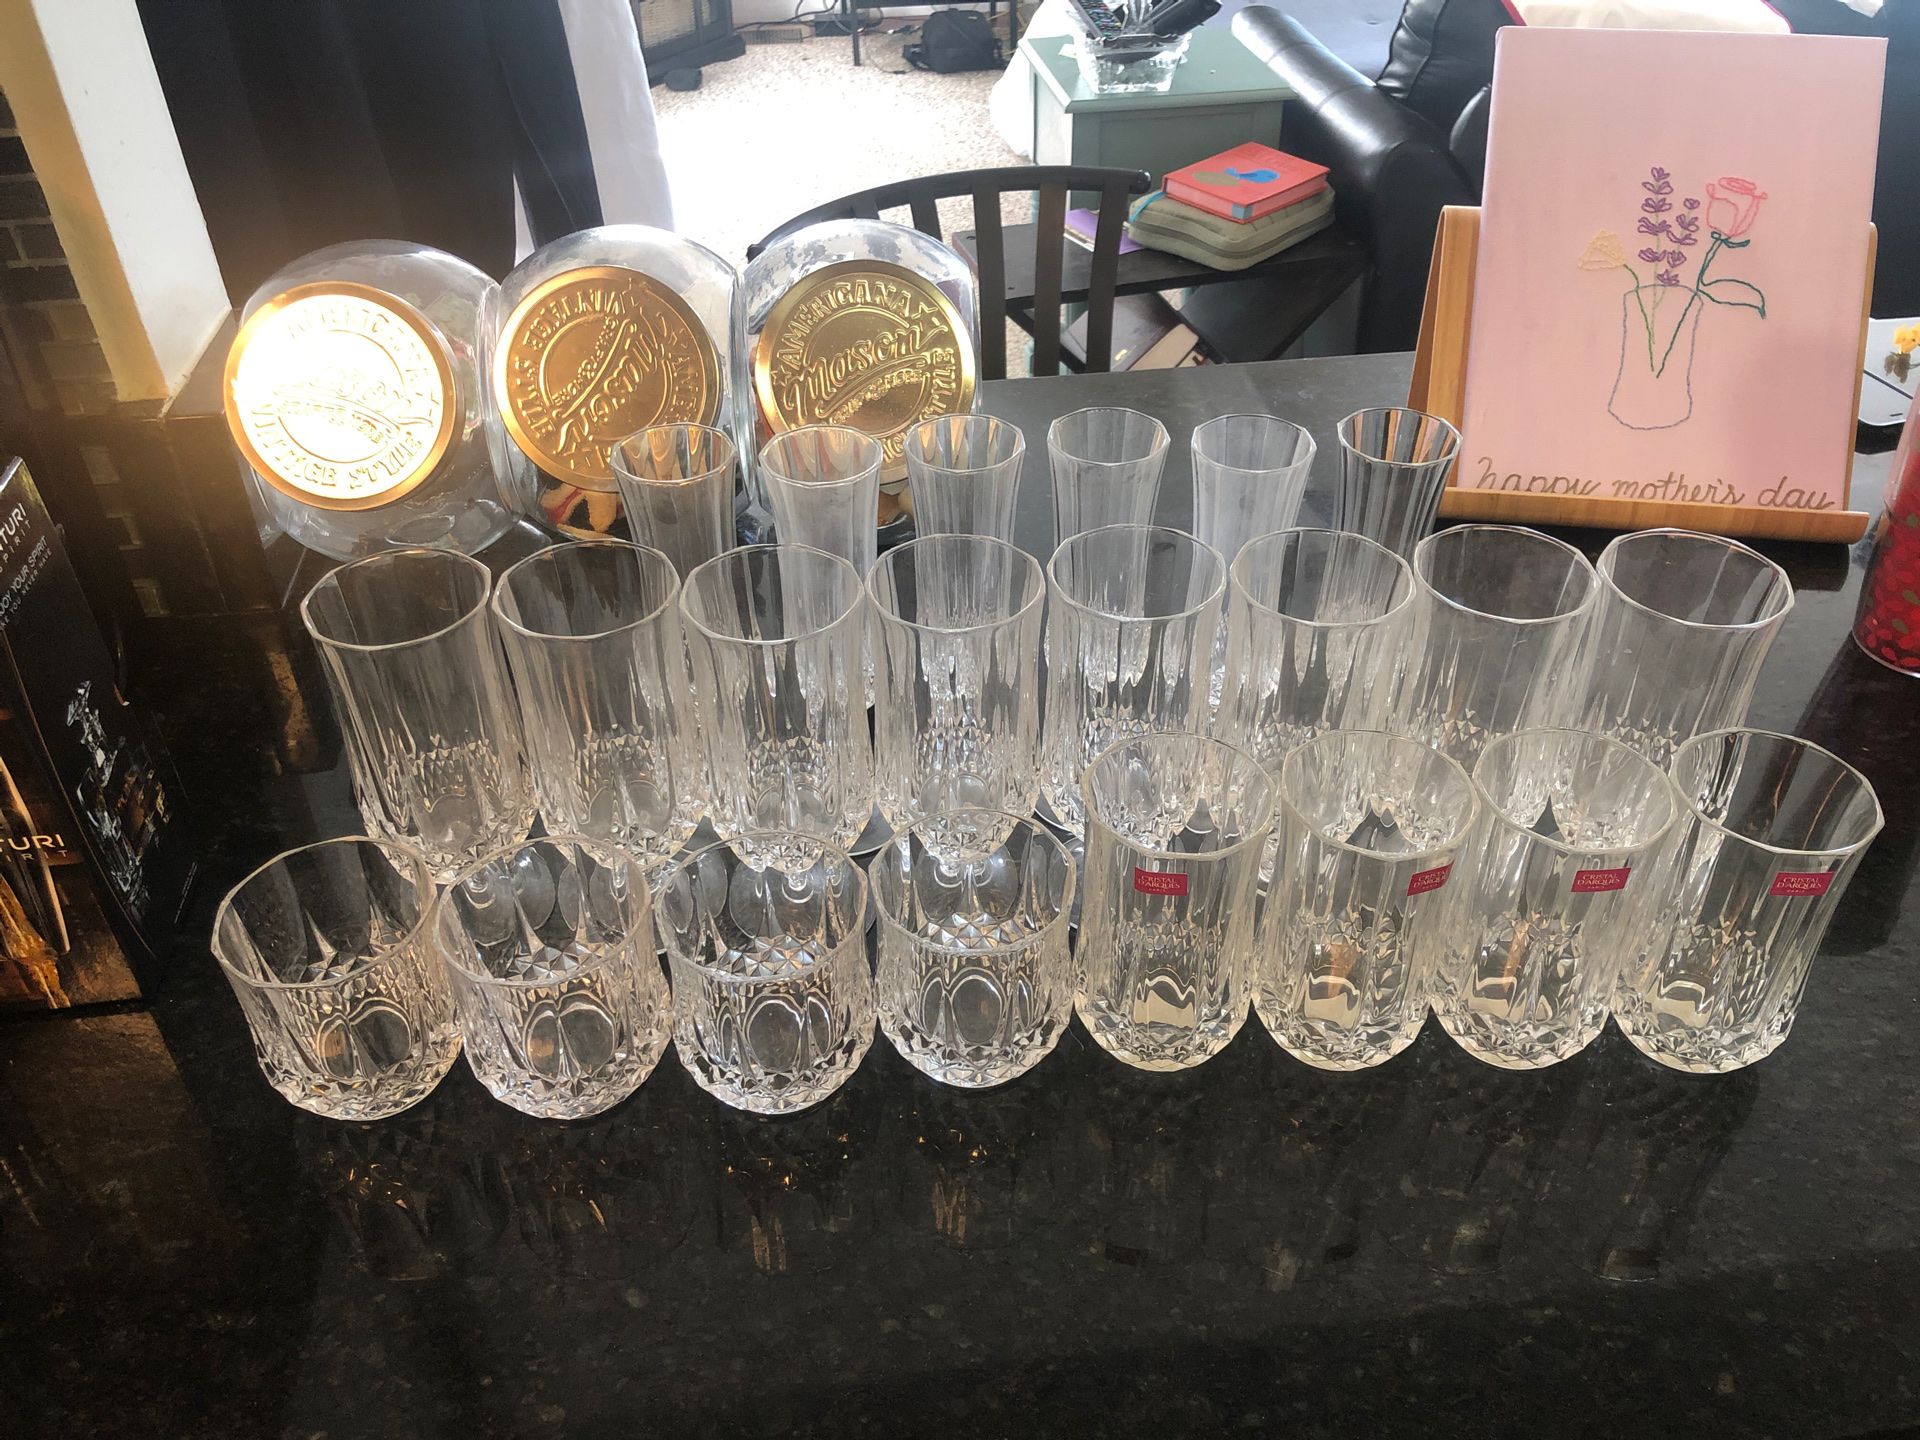 Brand new Cristal Darques glasses, flutes and hurricane glasses